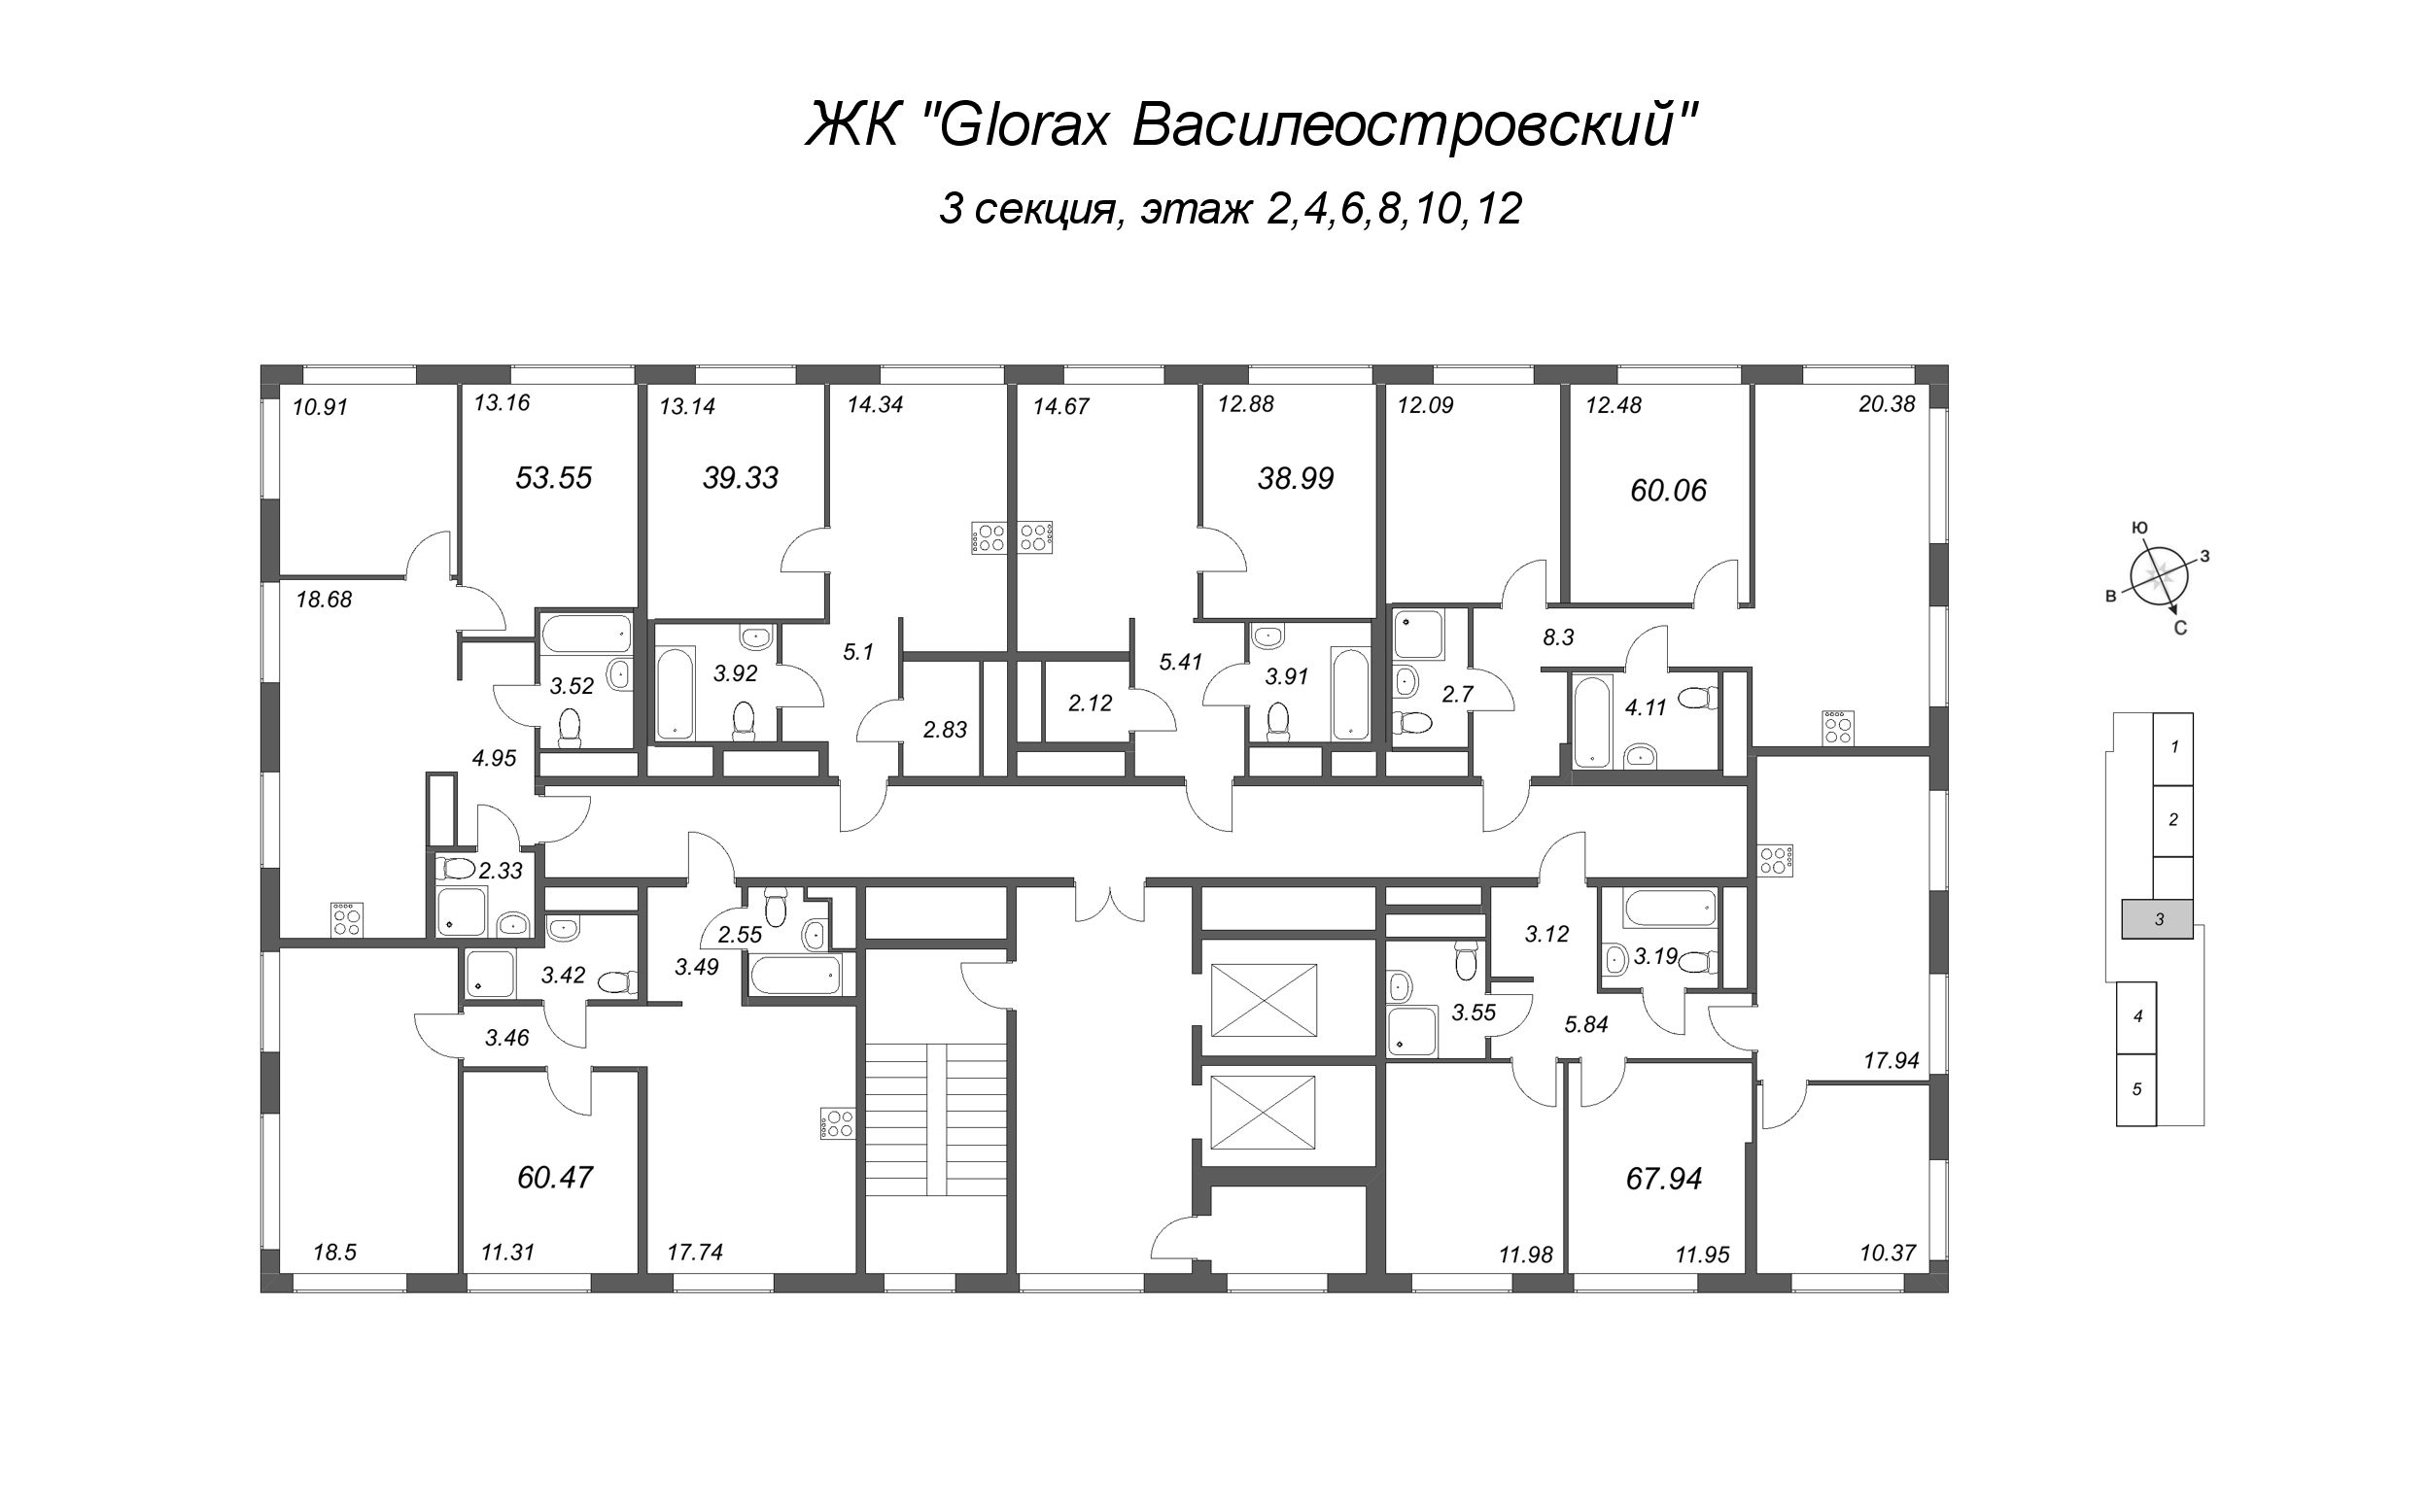 4-комнатная (Евро) квартира, 67.94 м² - планировка этажа